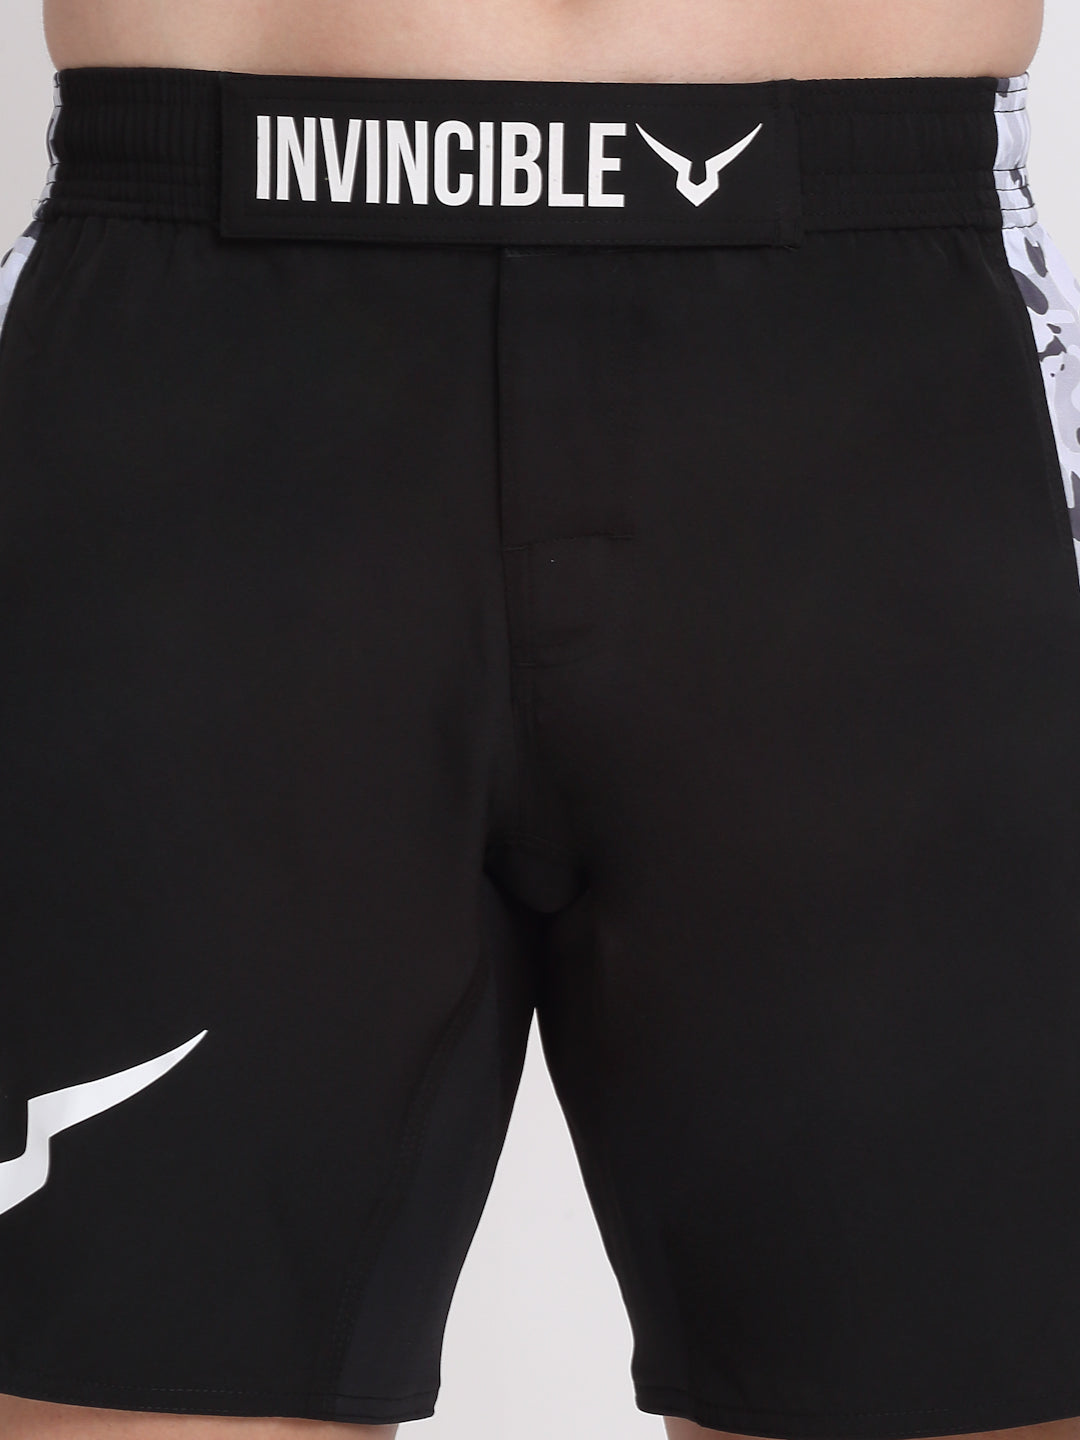 Invincible Men's MMA Training Shorts